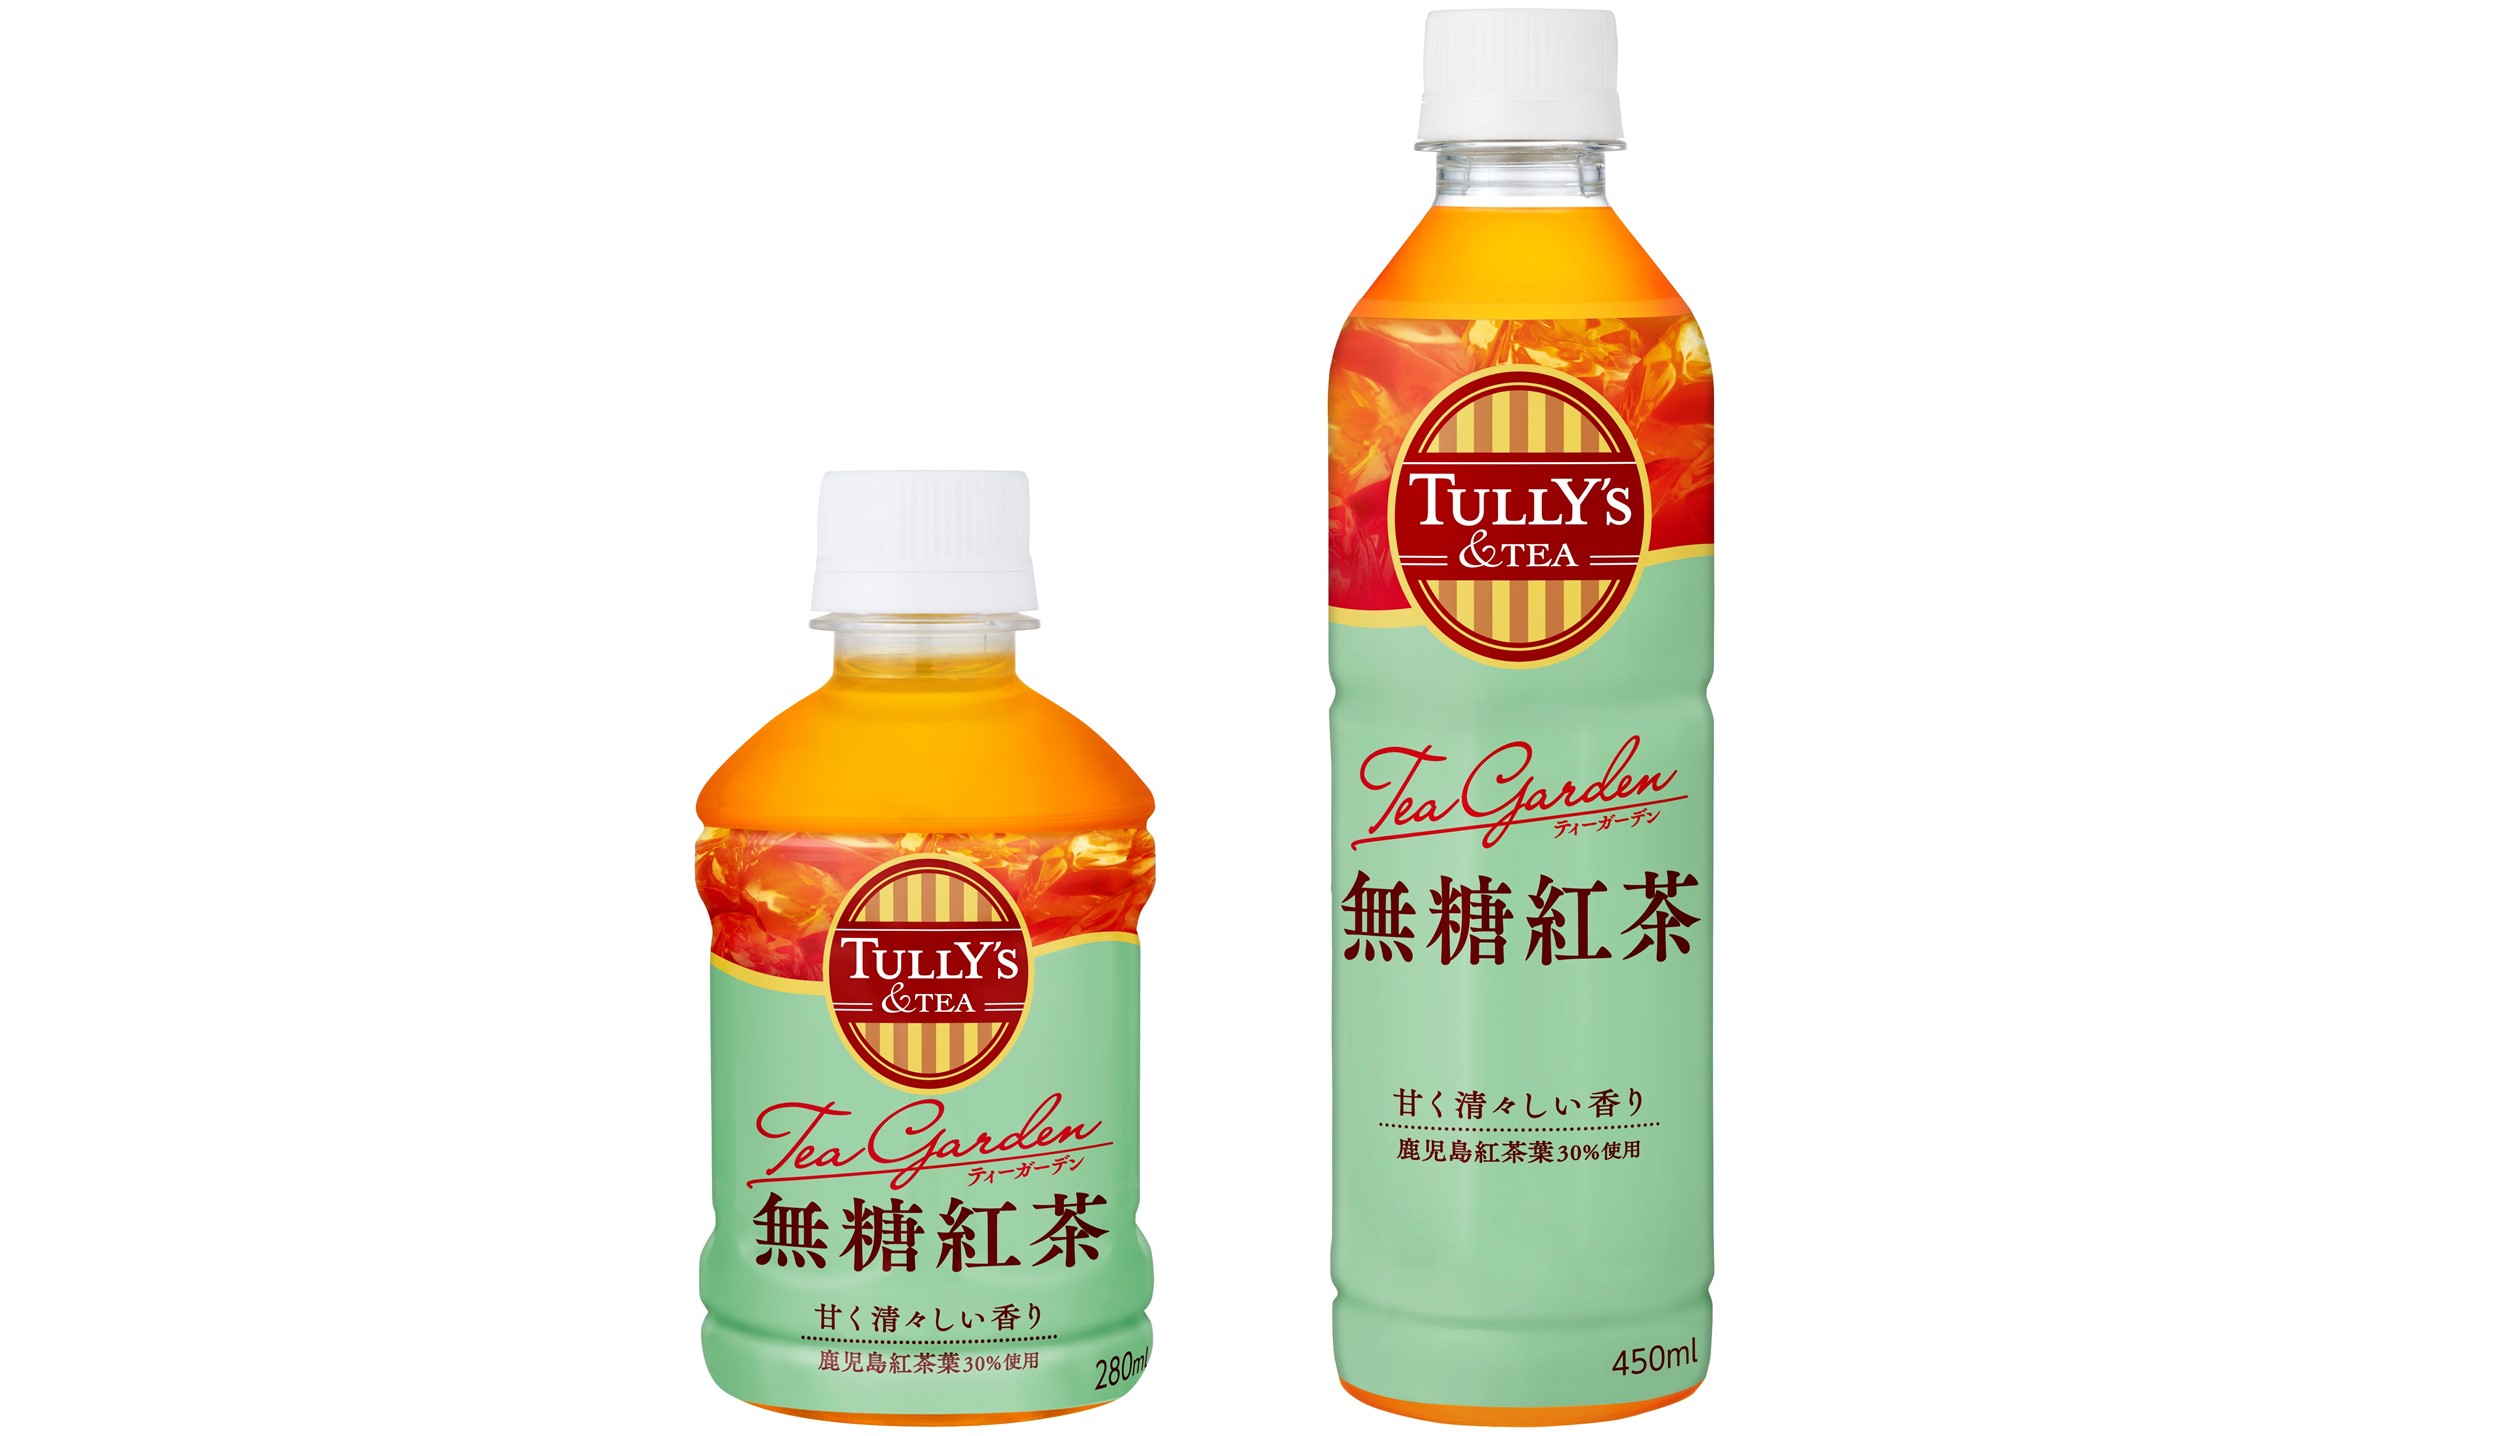 「TULLY’S &TEA Tea Garden 無糖紅茶」を、4月8日（月）に新発売